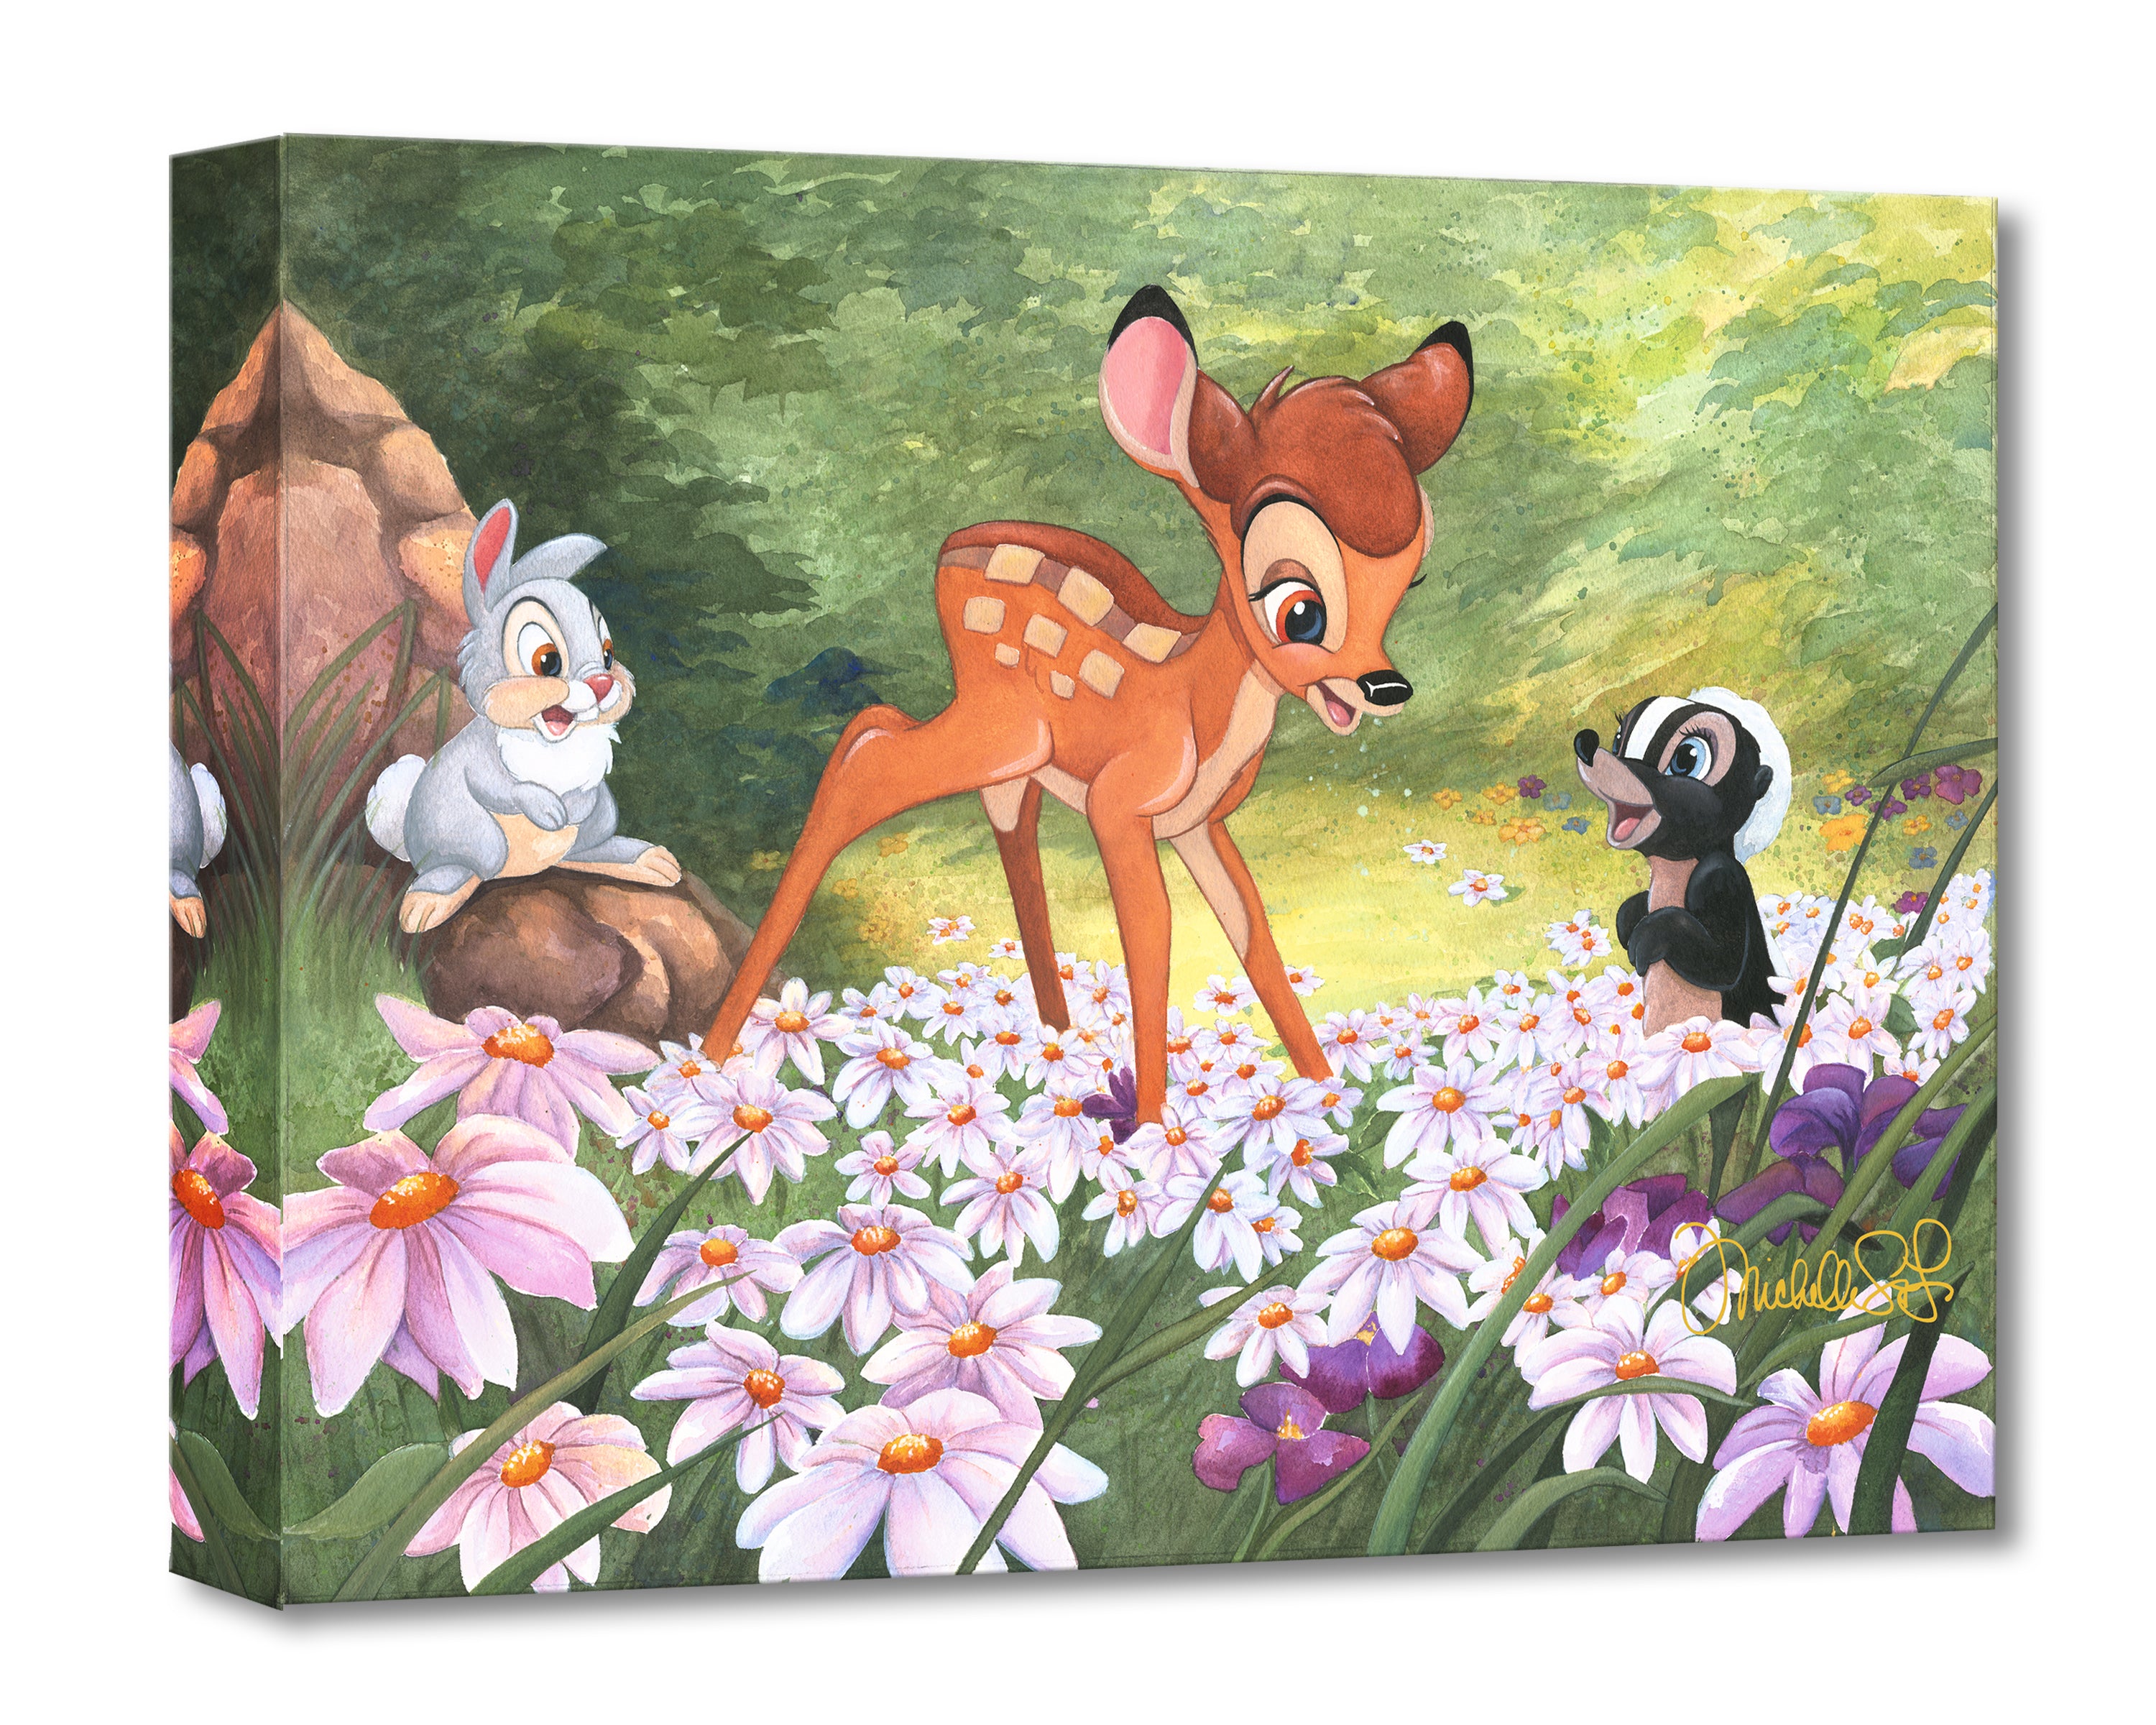 The Joy A Flower Brings - Disney Treasure On Canvas